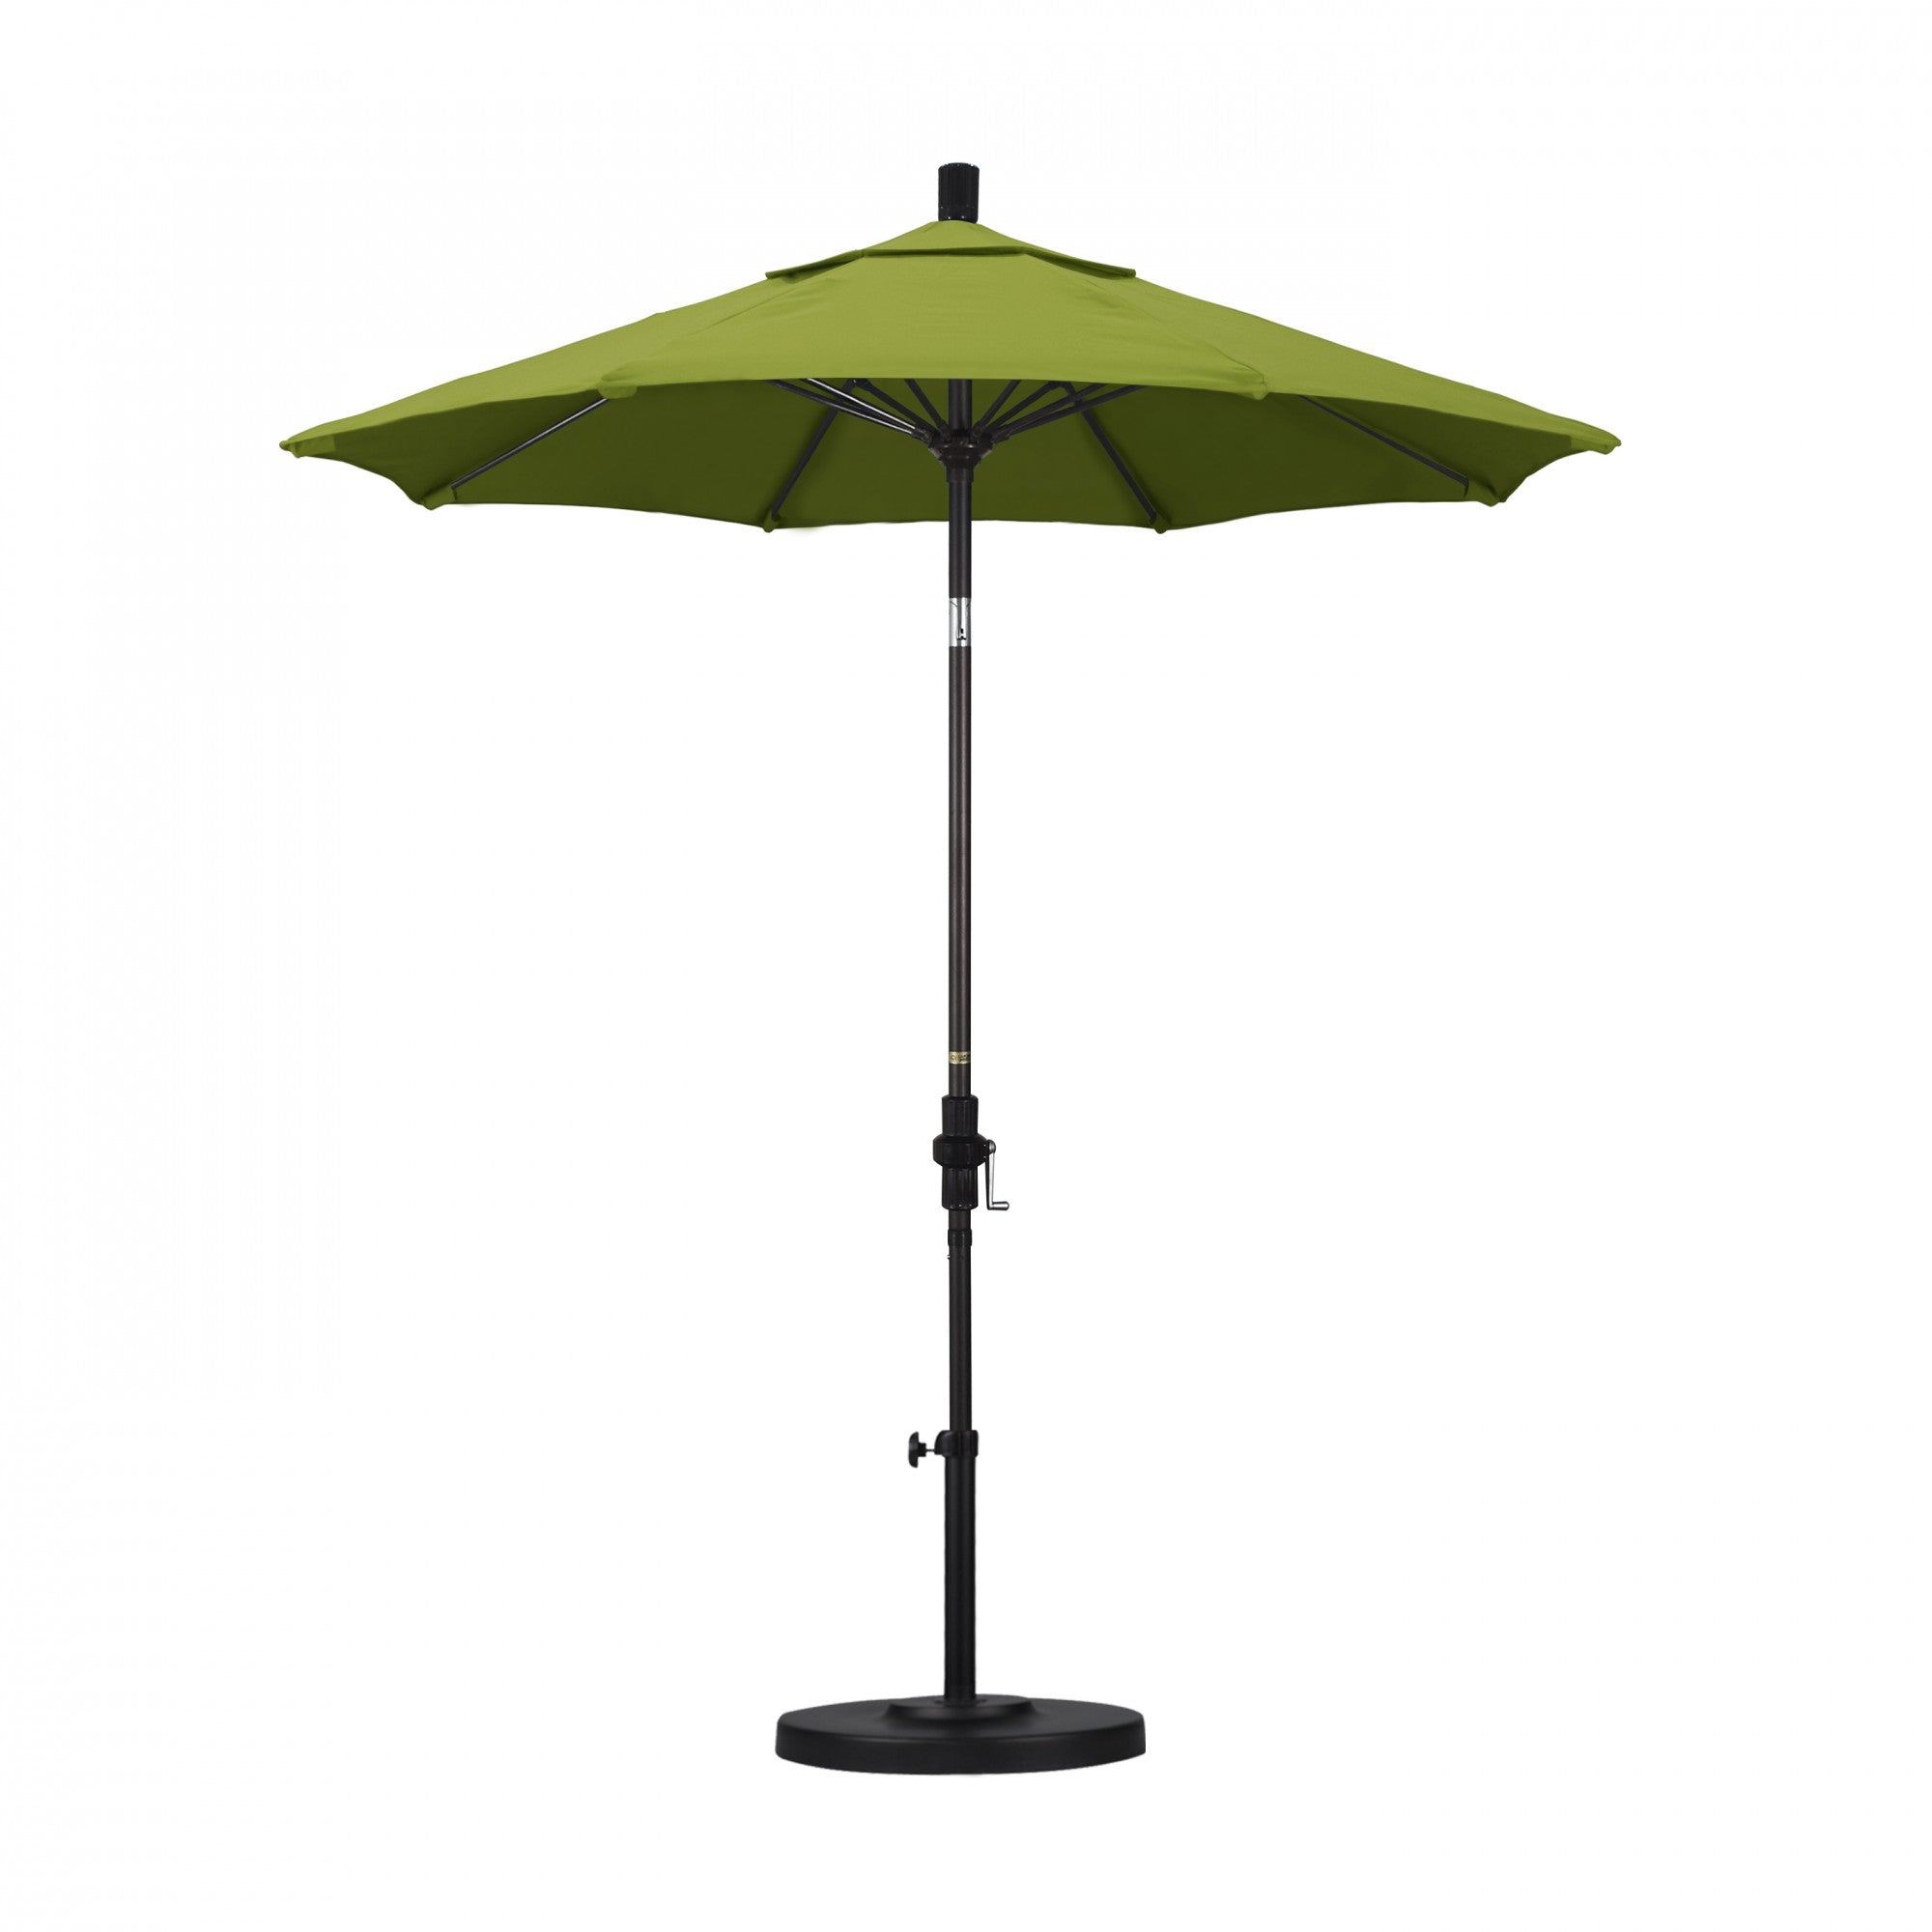 California Umbrella - 7.5' - Patio Umbrella Umbrella - Aluminum Pole - Kiwi - Olefin - GSCUF758117-F55